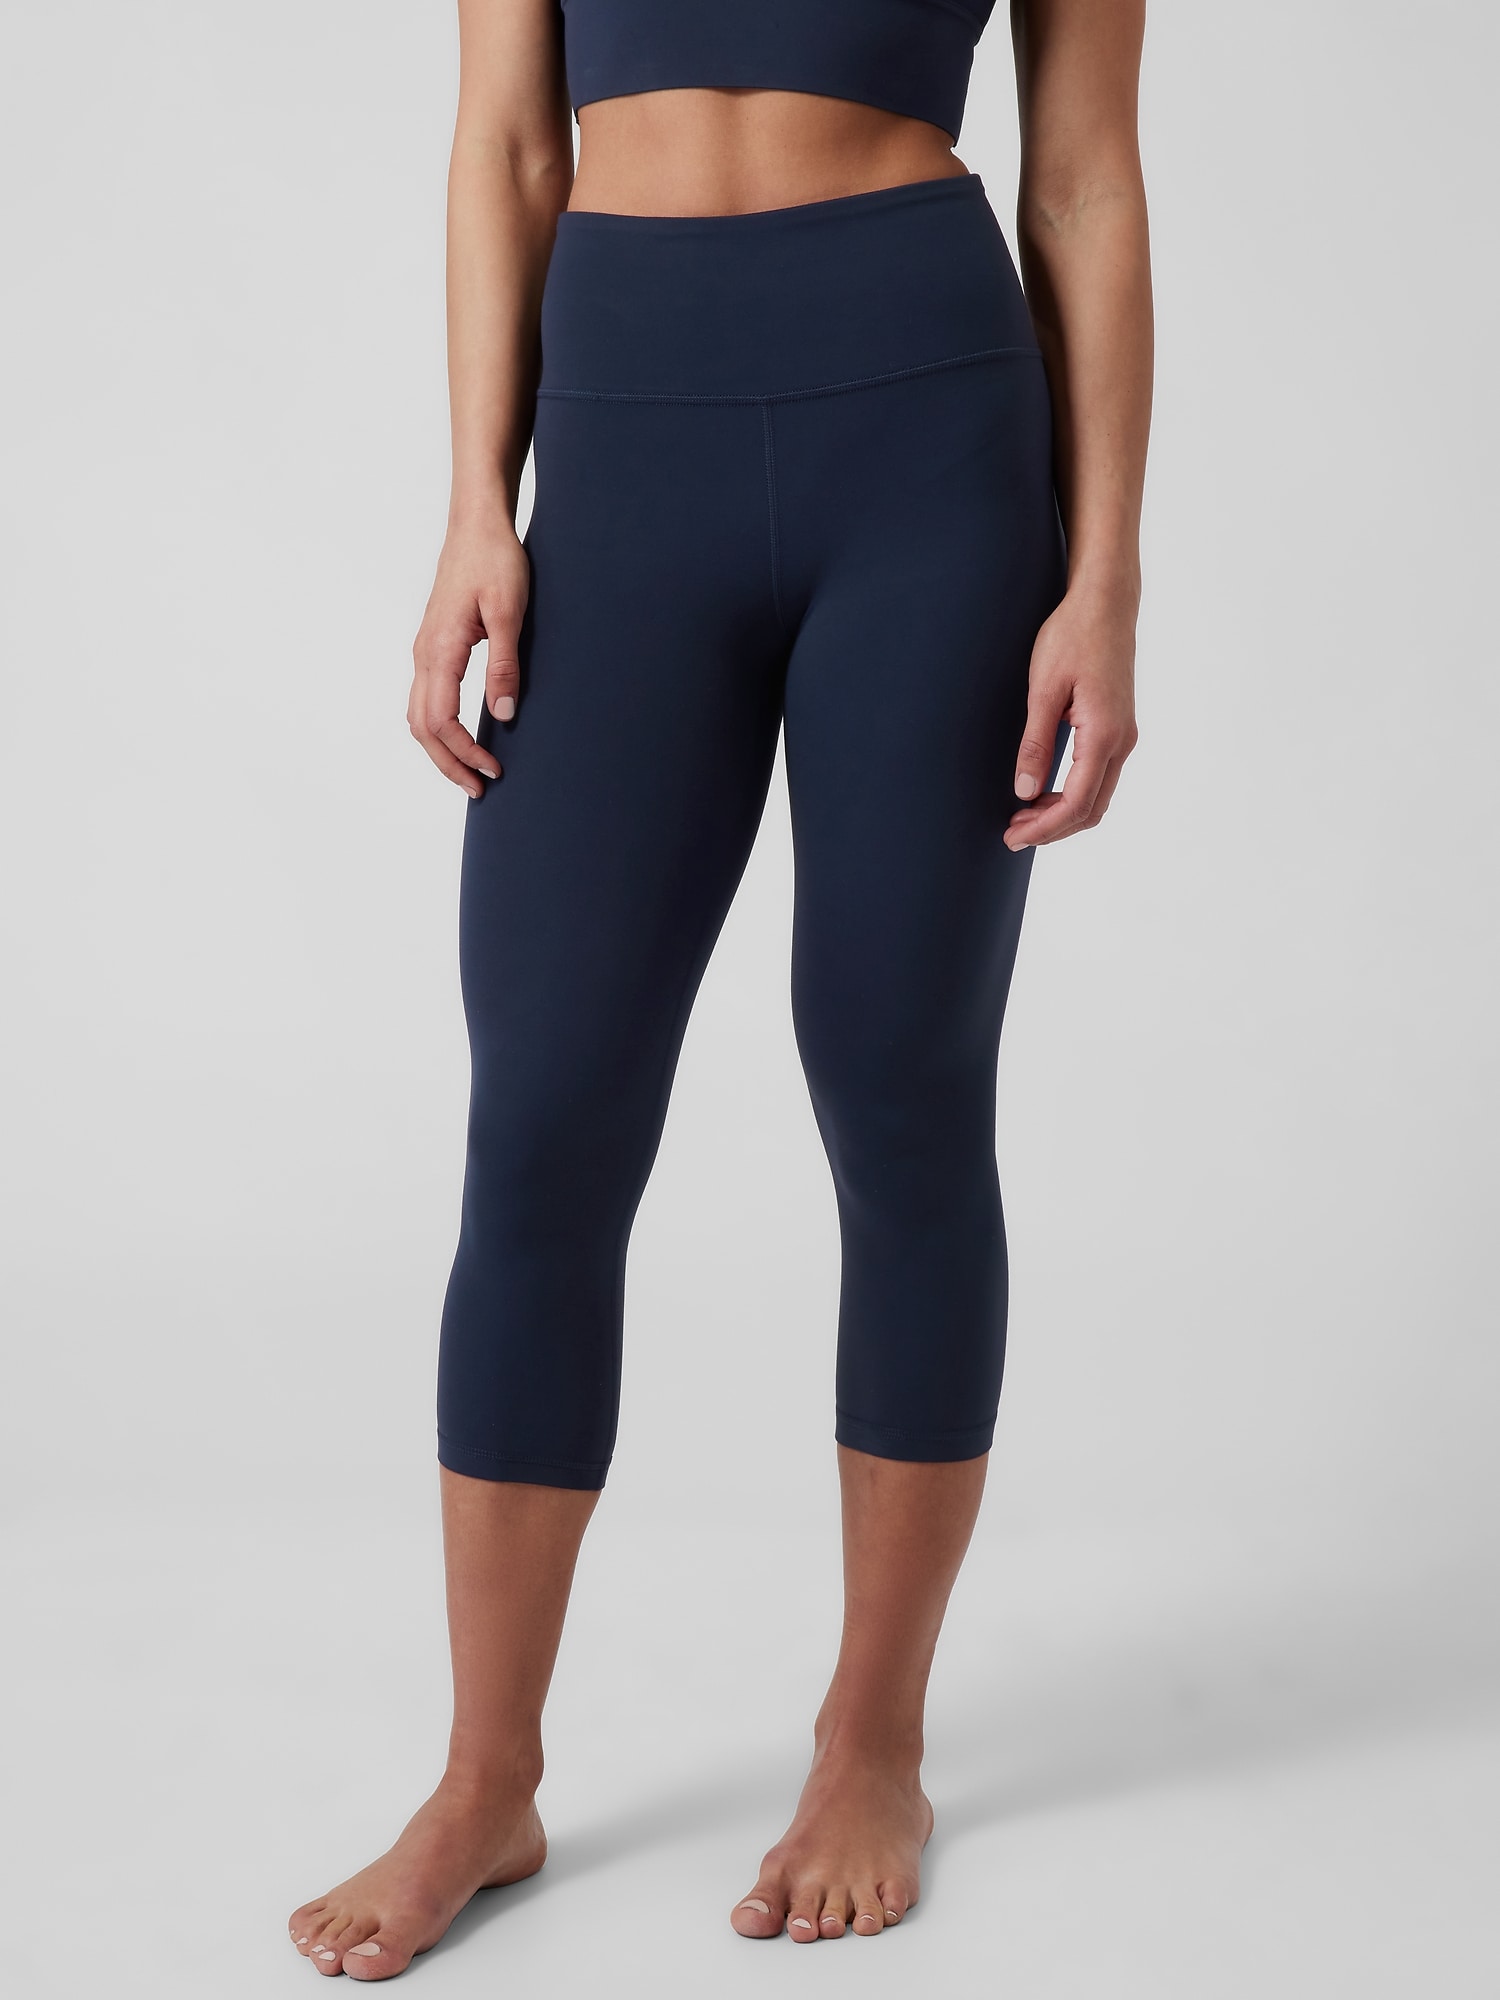 Athleta Women's Black Extra Large Elation Capri Pants Size XL